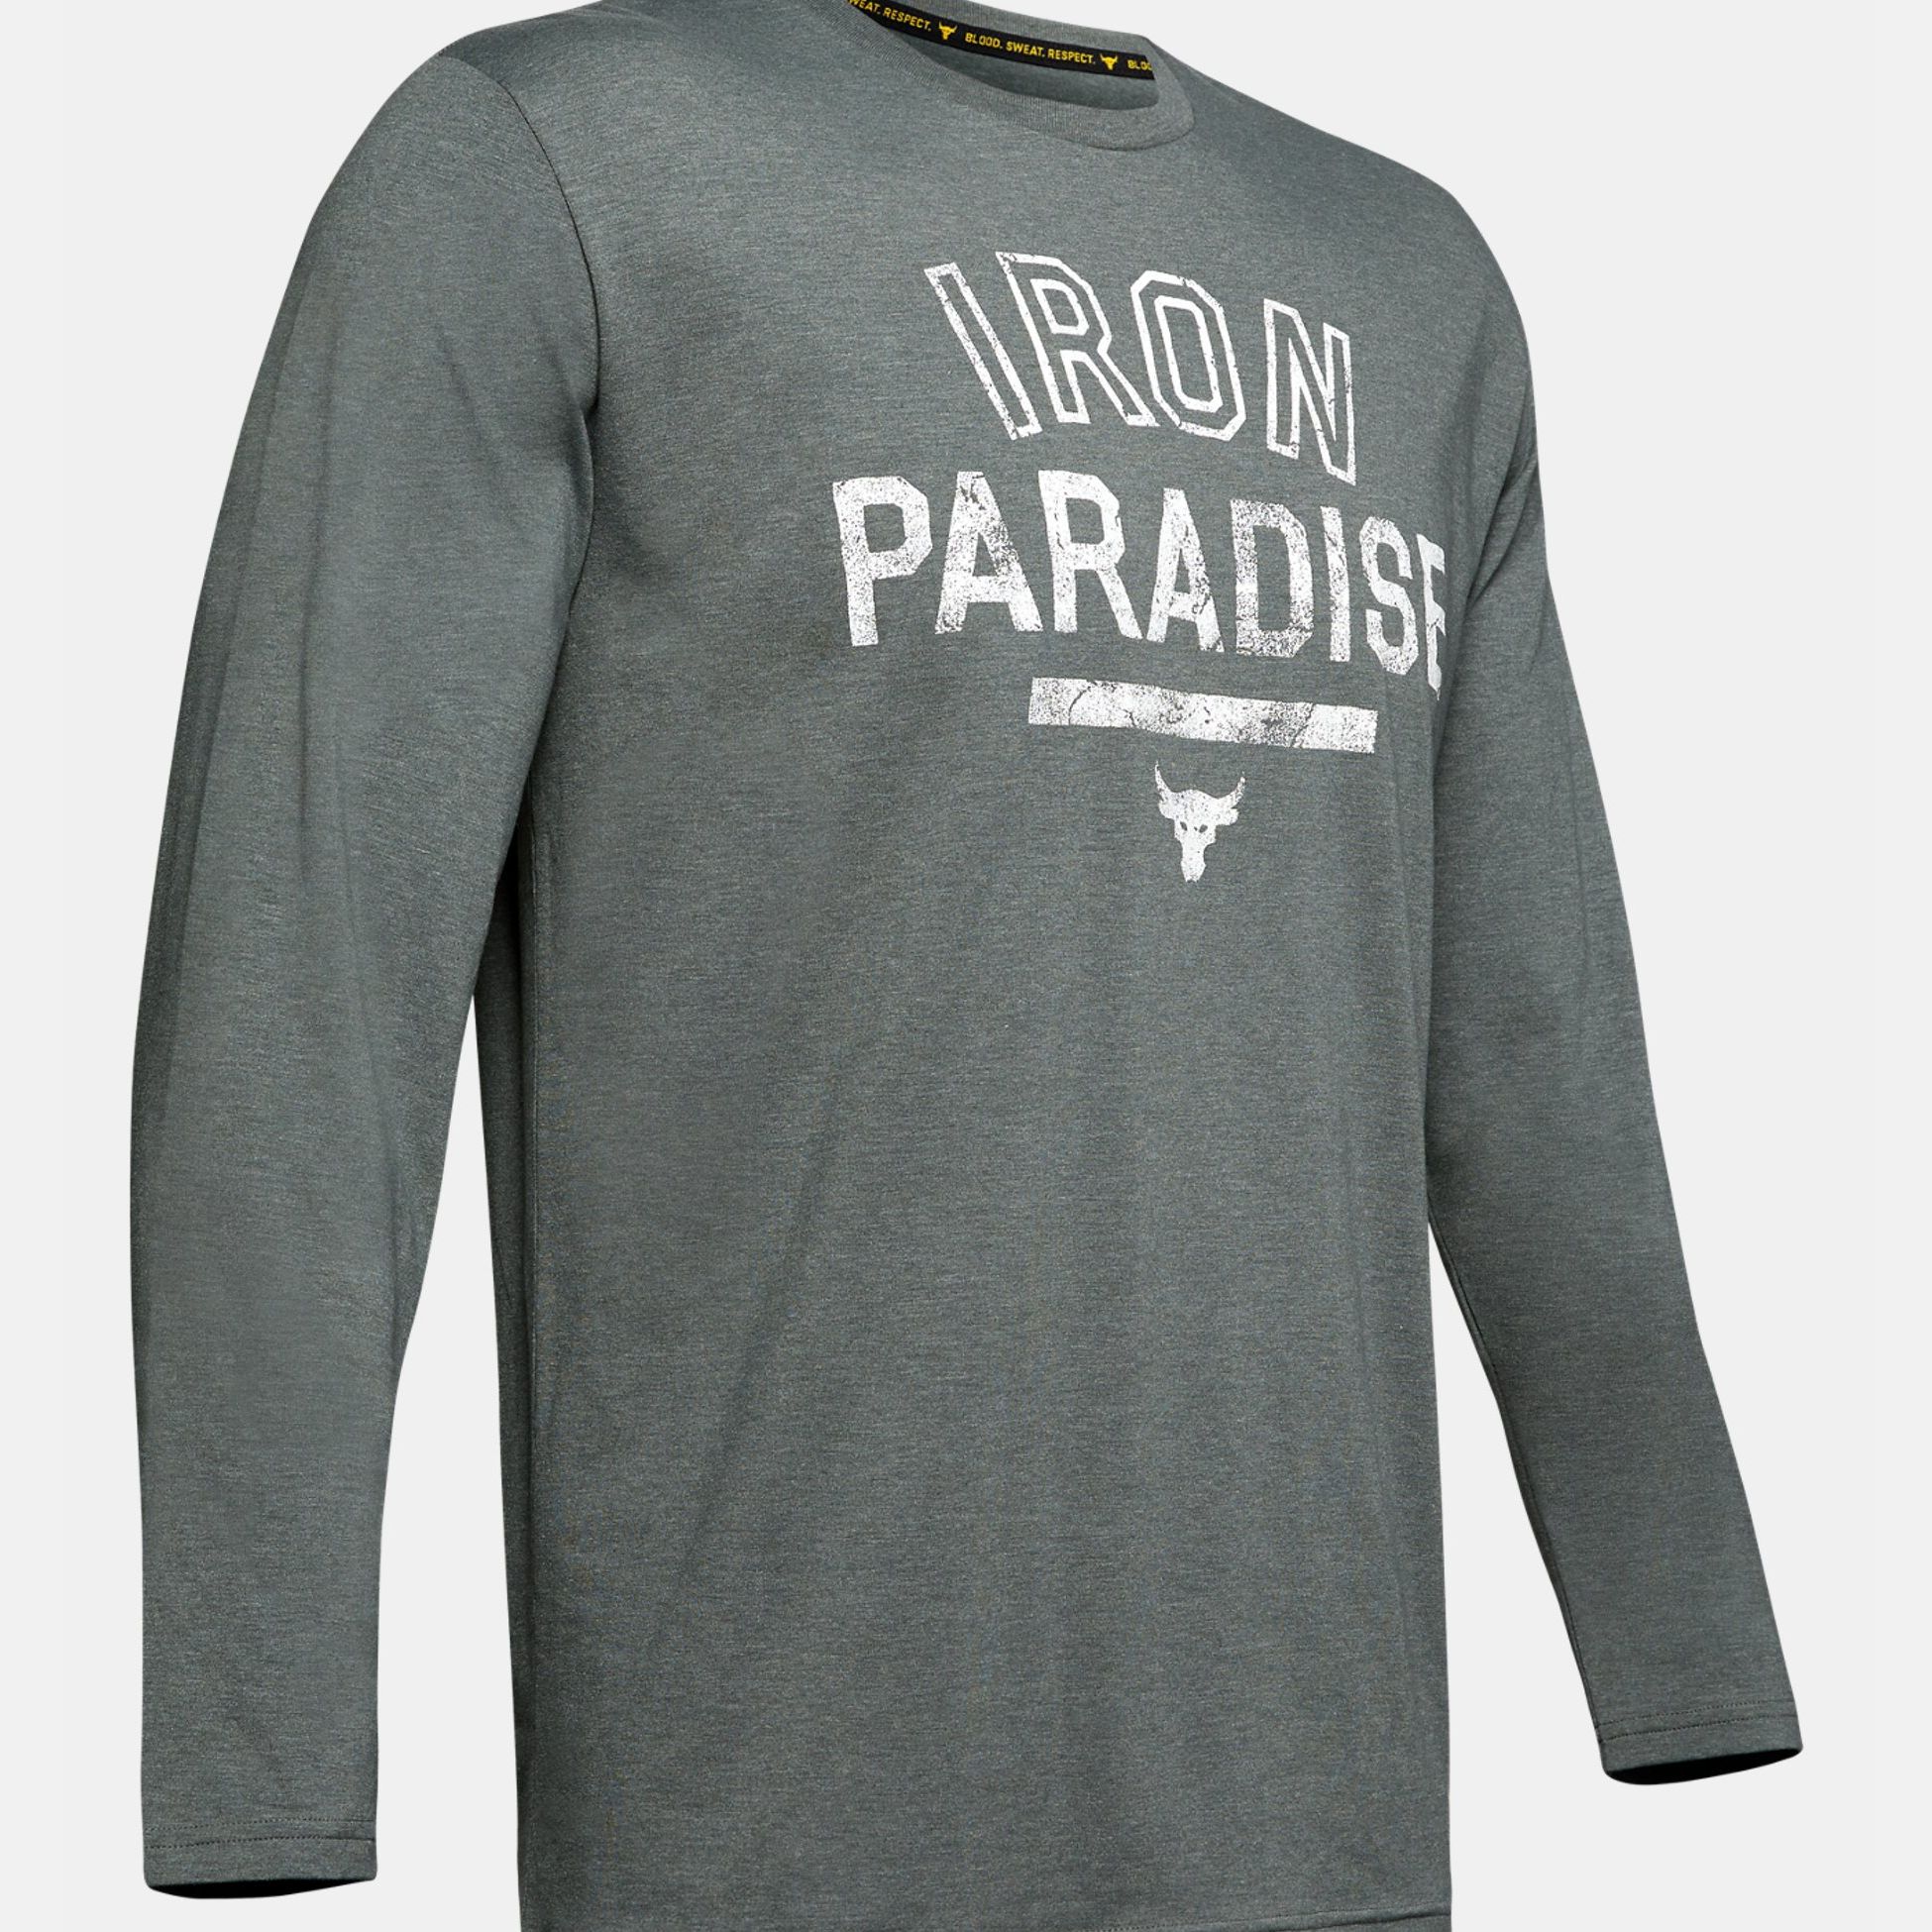 Sweatshirts -  under armour Project Rock Iron Paradise Long Sleeve 6101